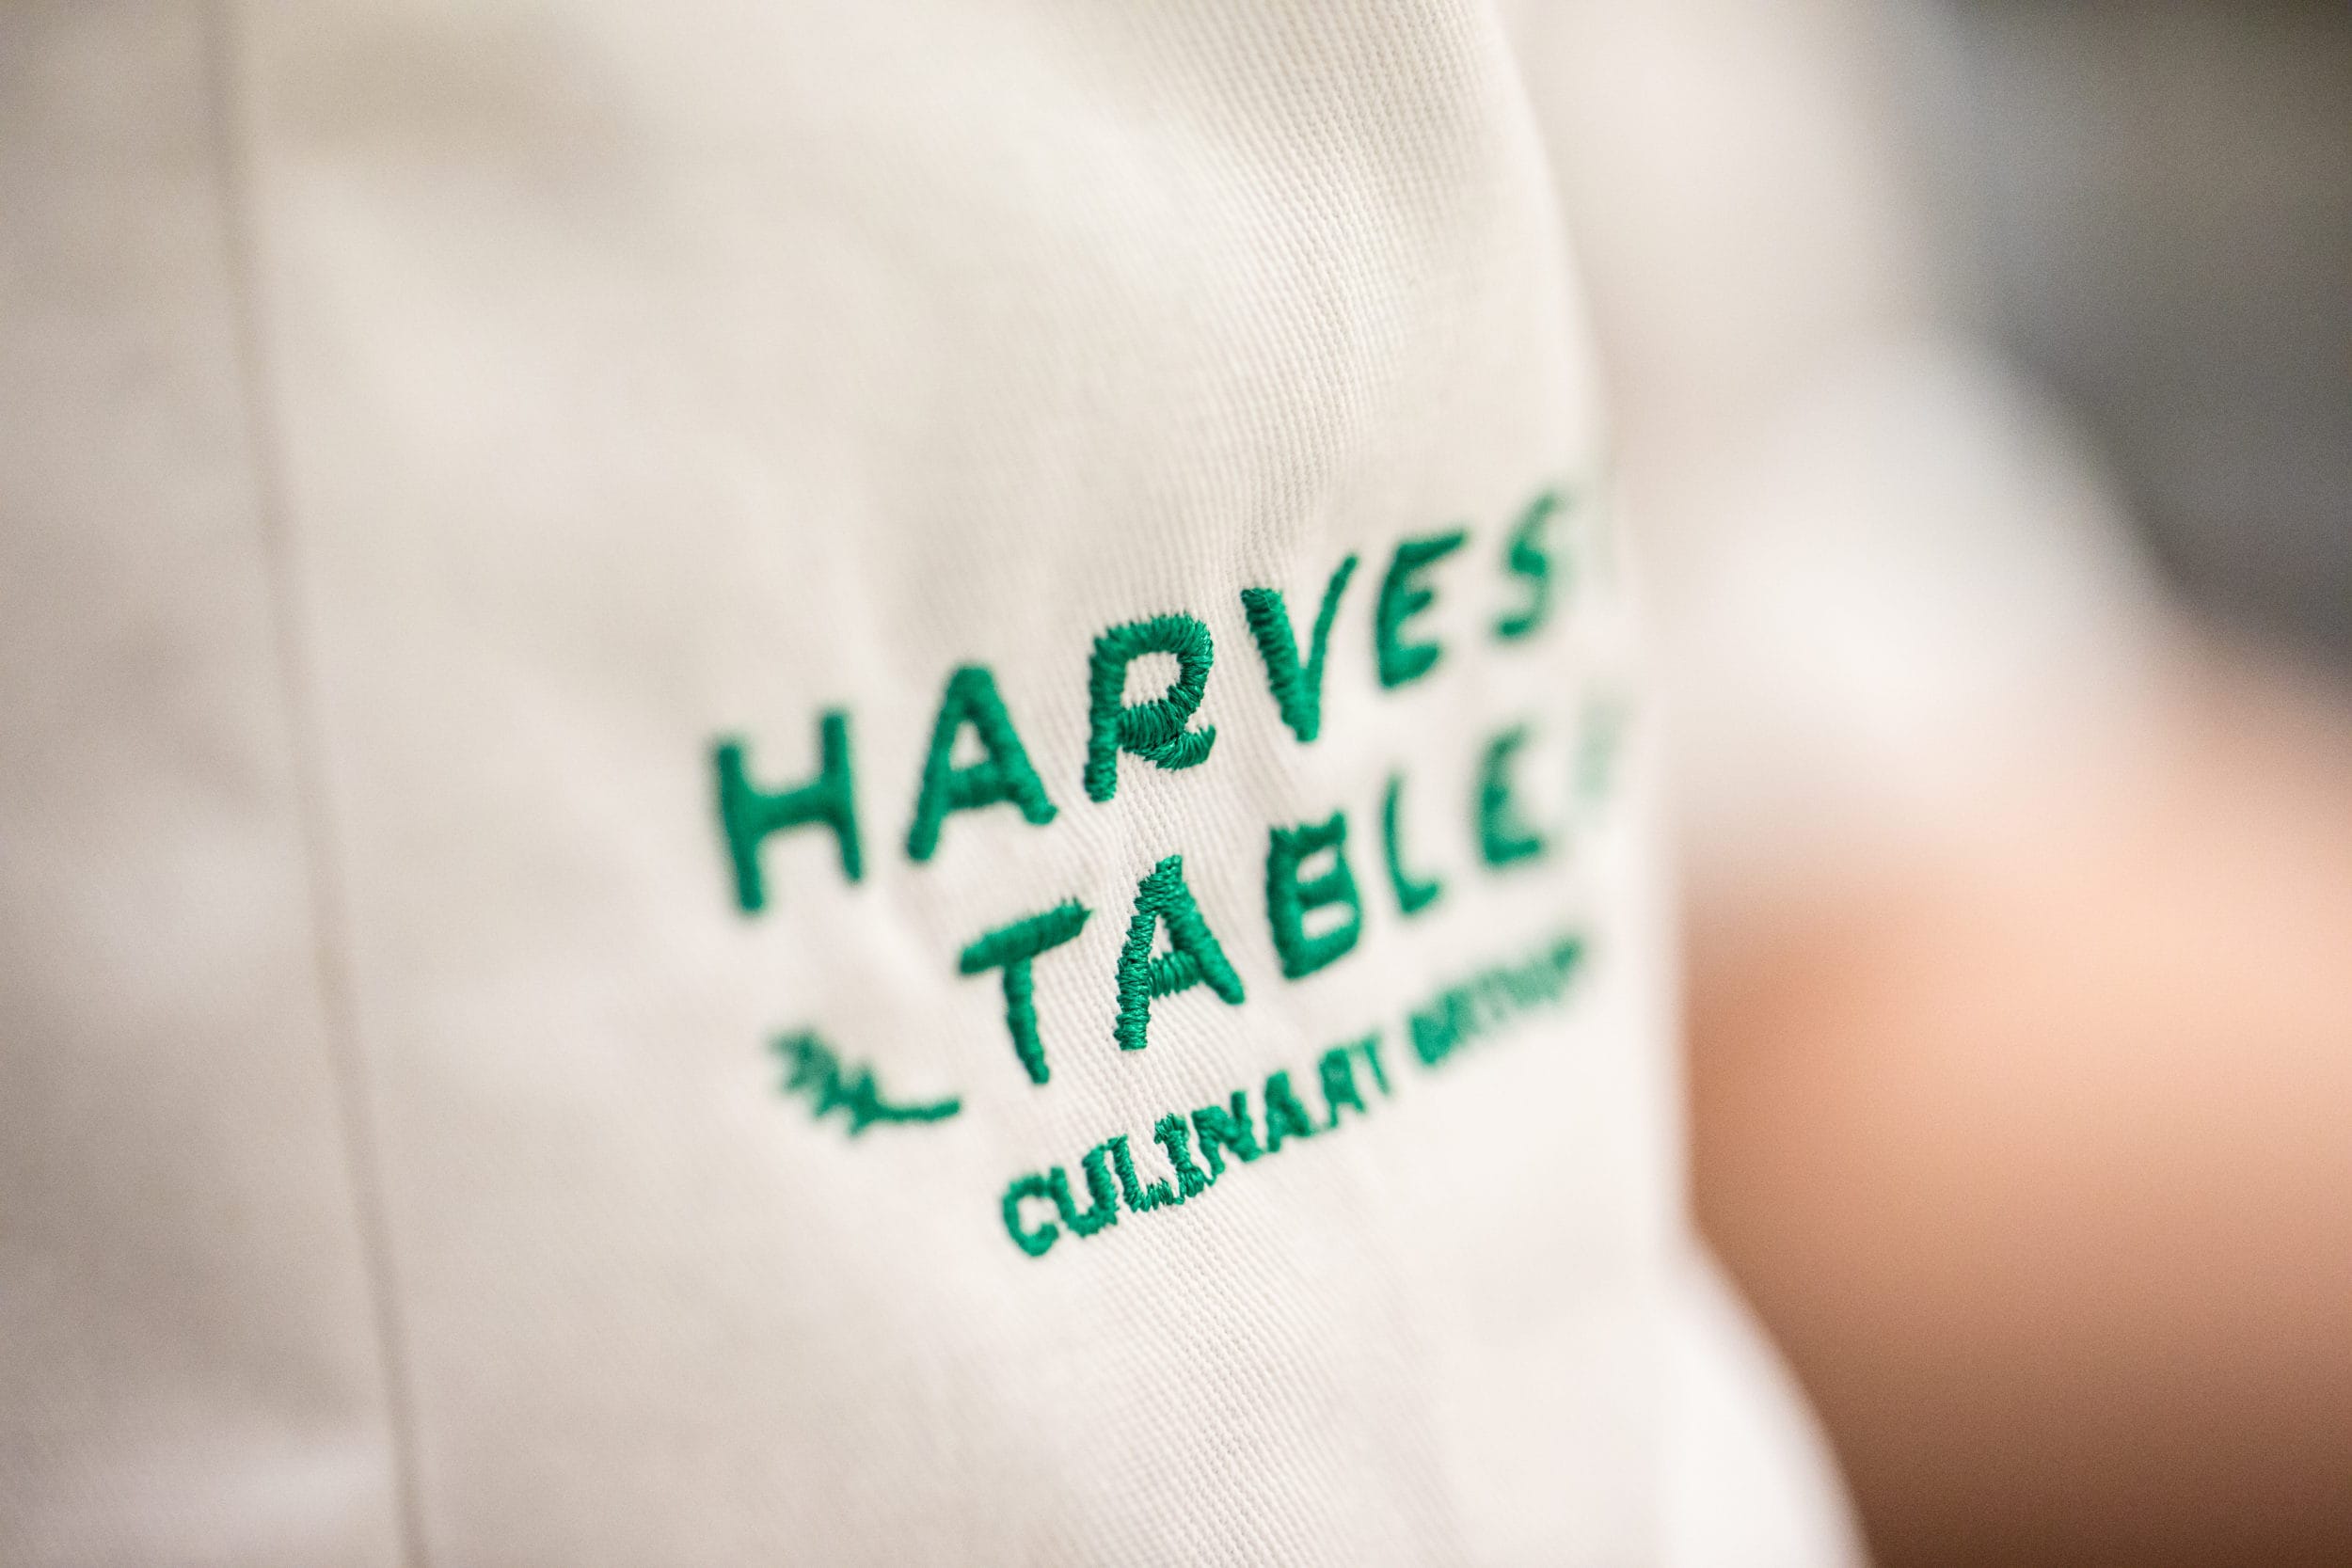 harvest table logo on shirt